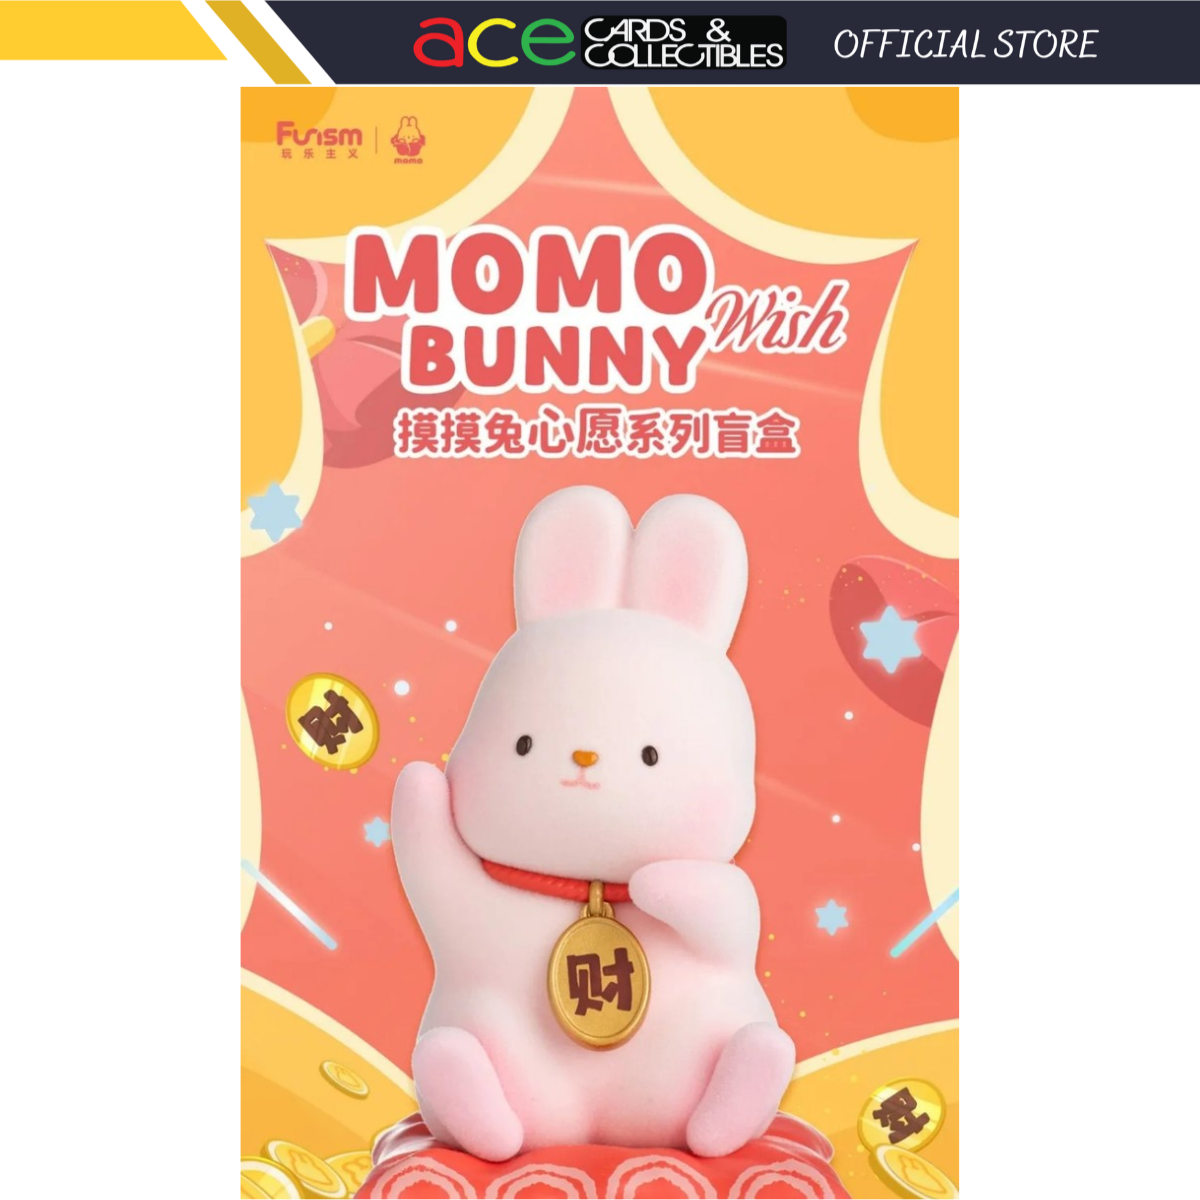 Funism x Momo Bunny Wish Series-Single Box (Random)-Funism-Ace Cards & Collectibles